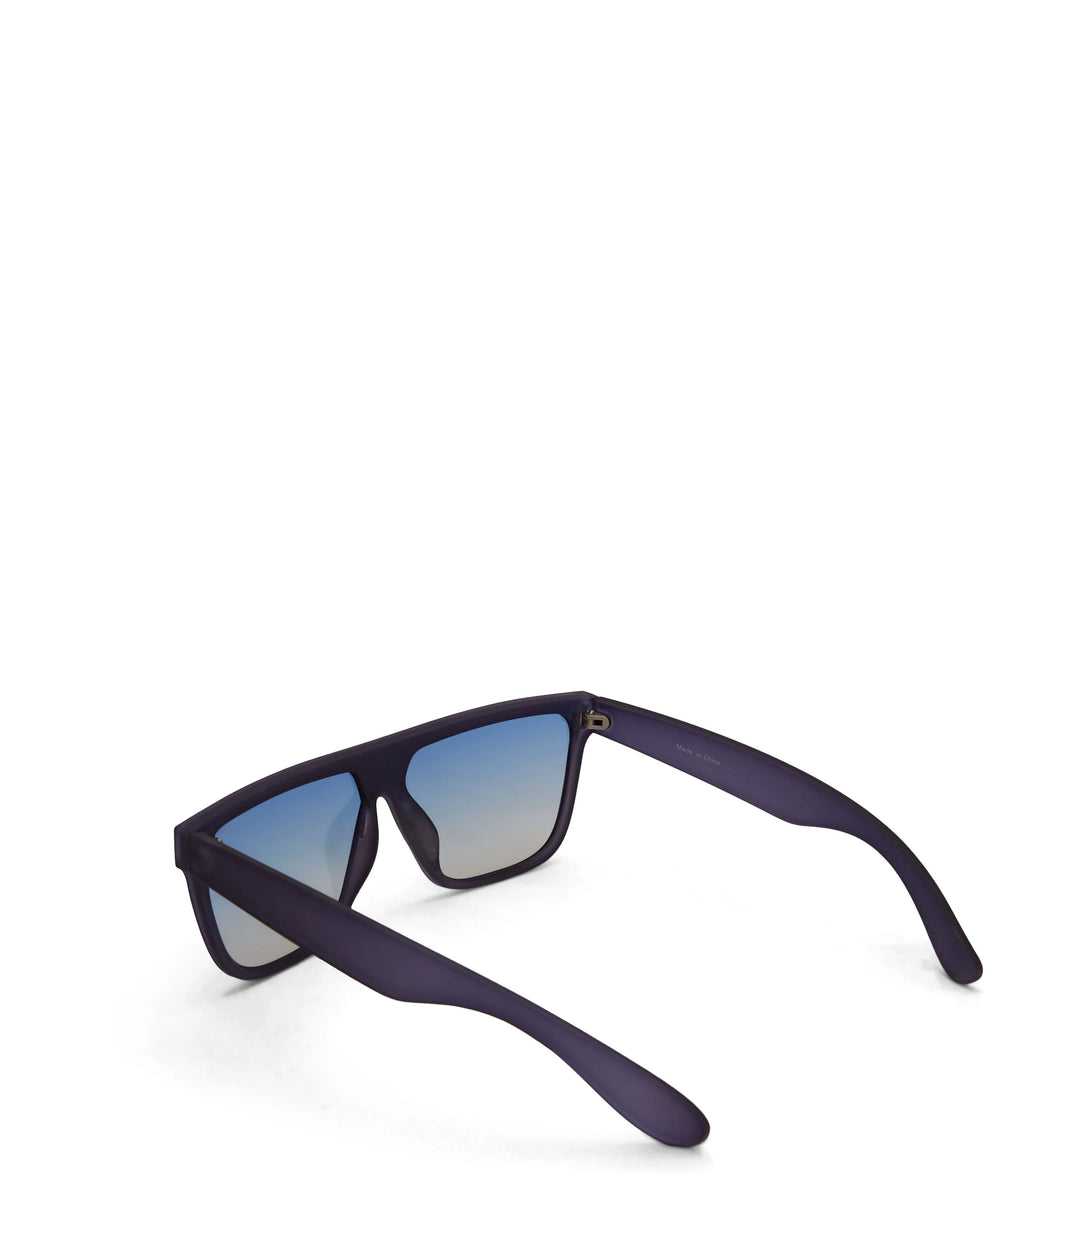 Feige Sunglasses - Blue